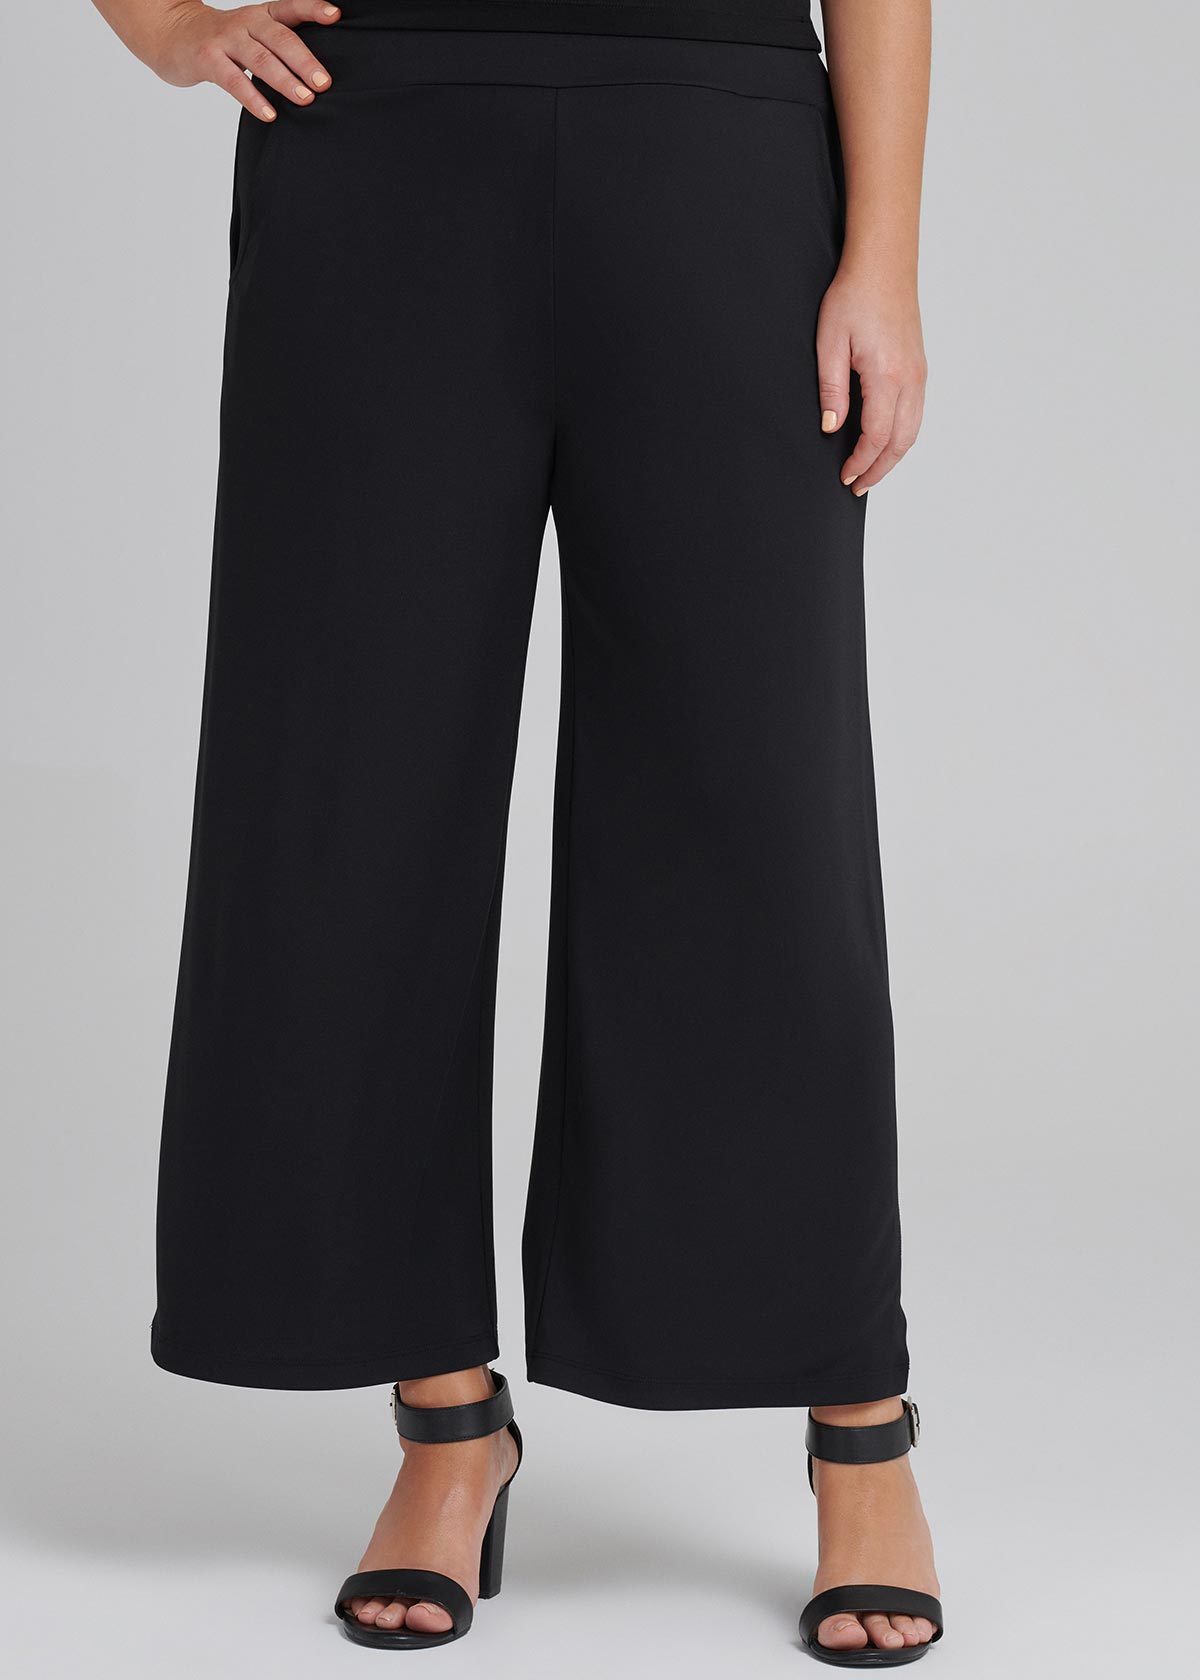 Shop Back To Black Crop Pant in Black, Sizes 12-30 | Taking Shape AU